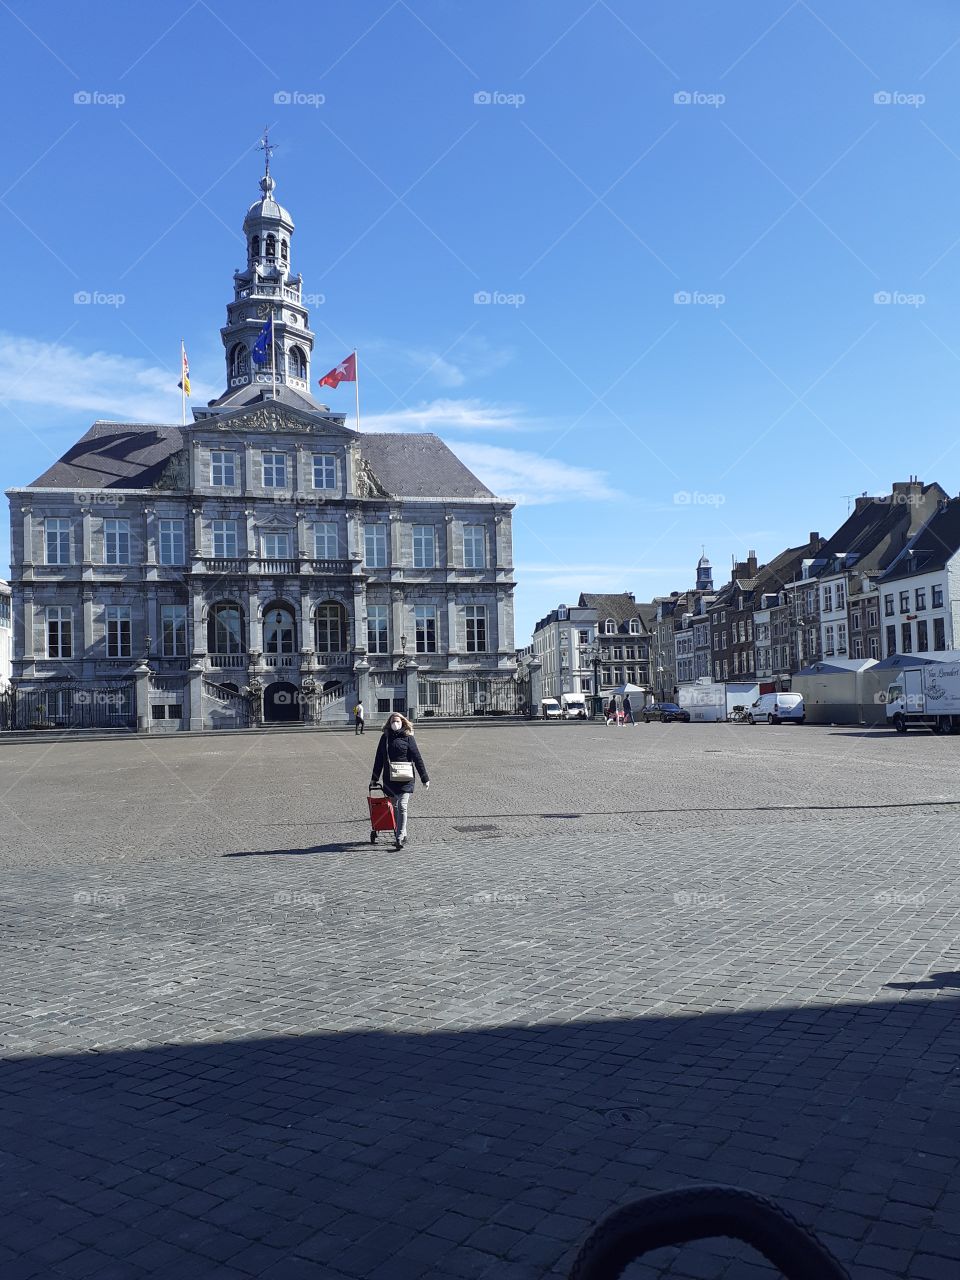 Maastricht in Corona times